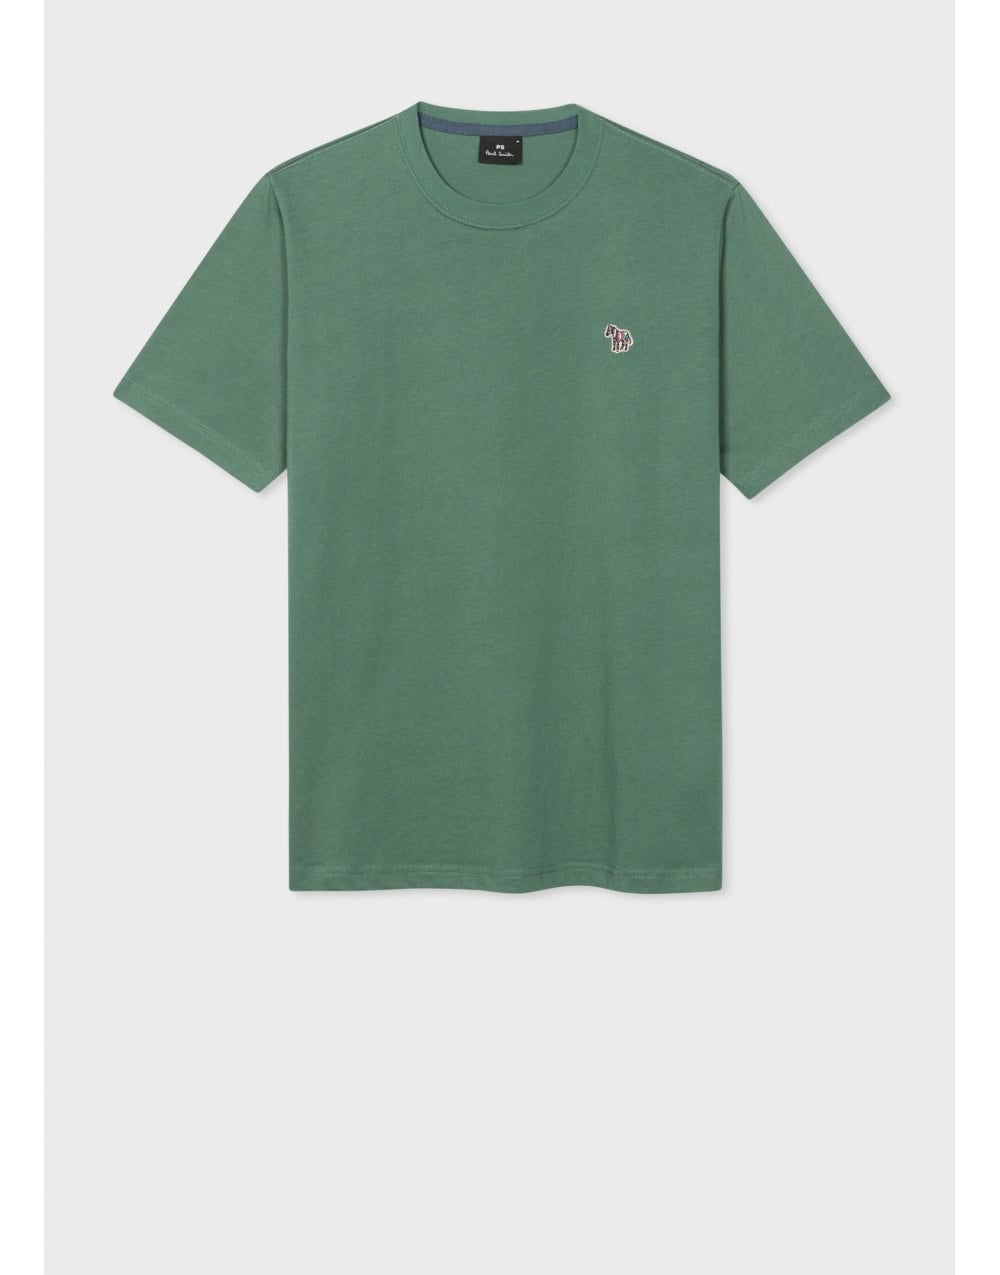 Paul Smith Paul Smith Zebra Regular Fit T-shirt Col: 33c Emerald Green, Size: L